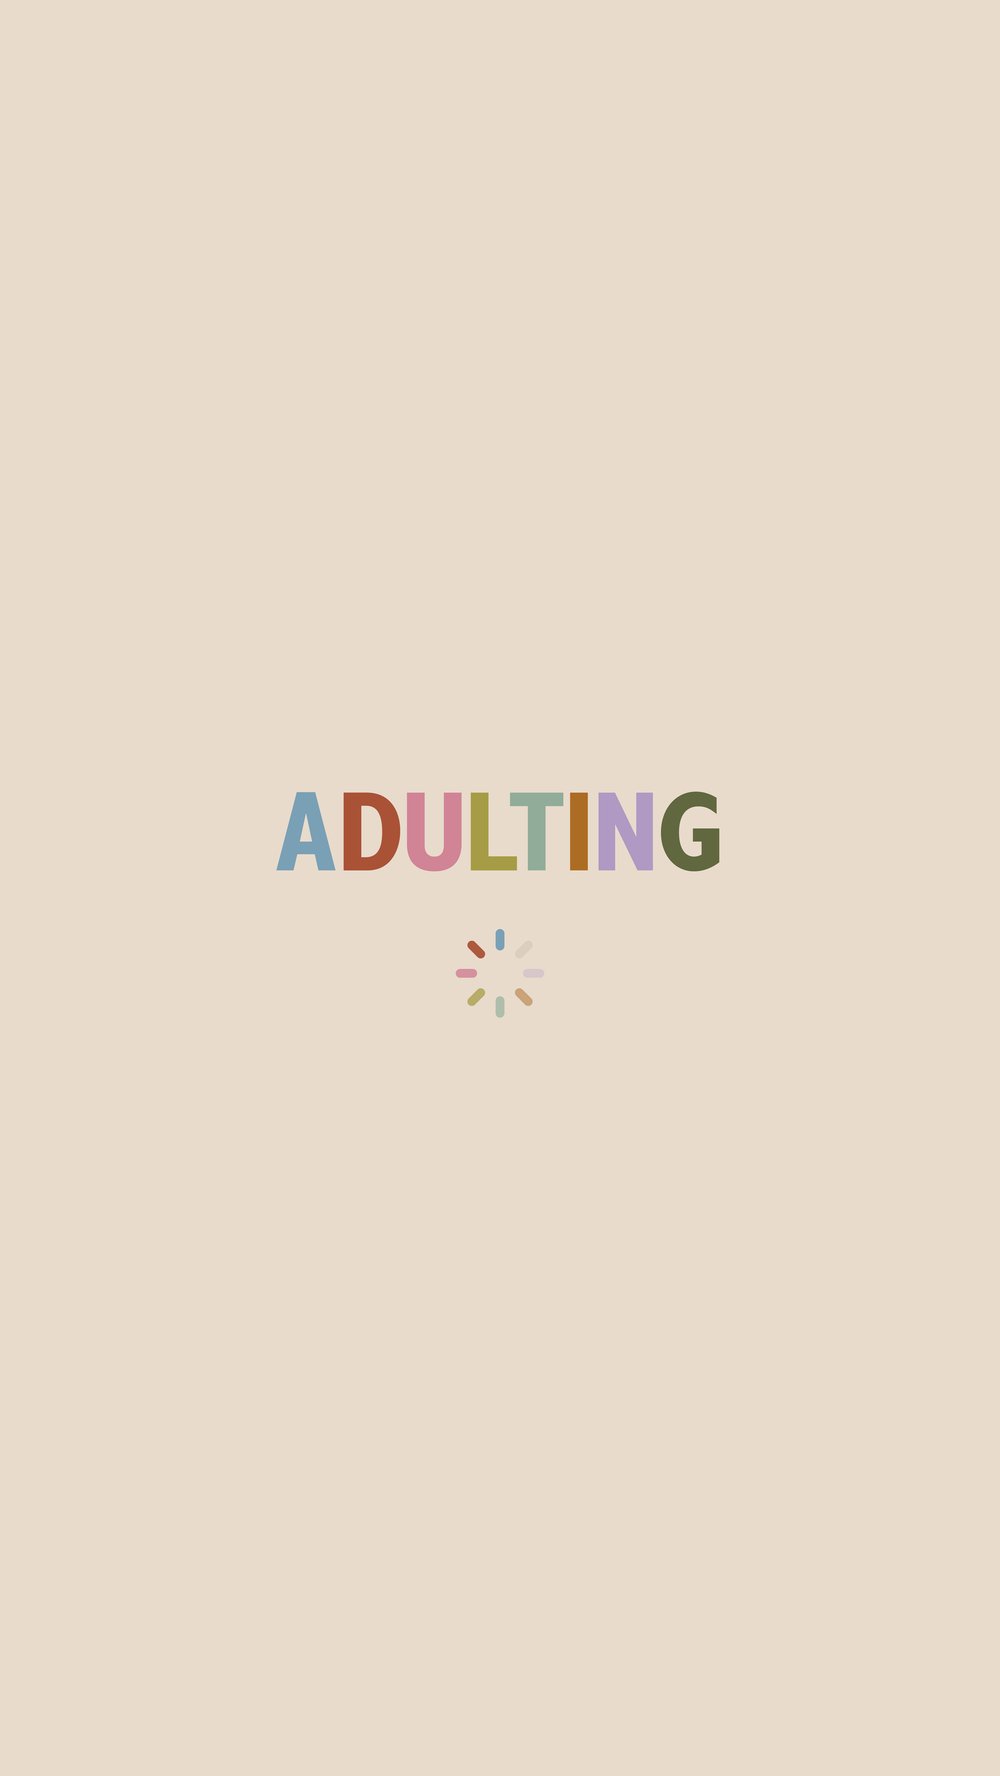 Adulting_Wallpaper.jpg